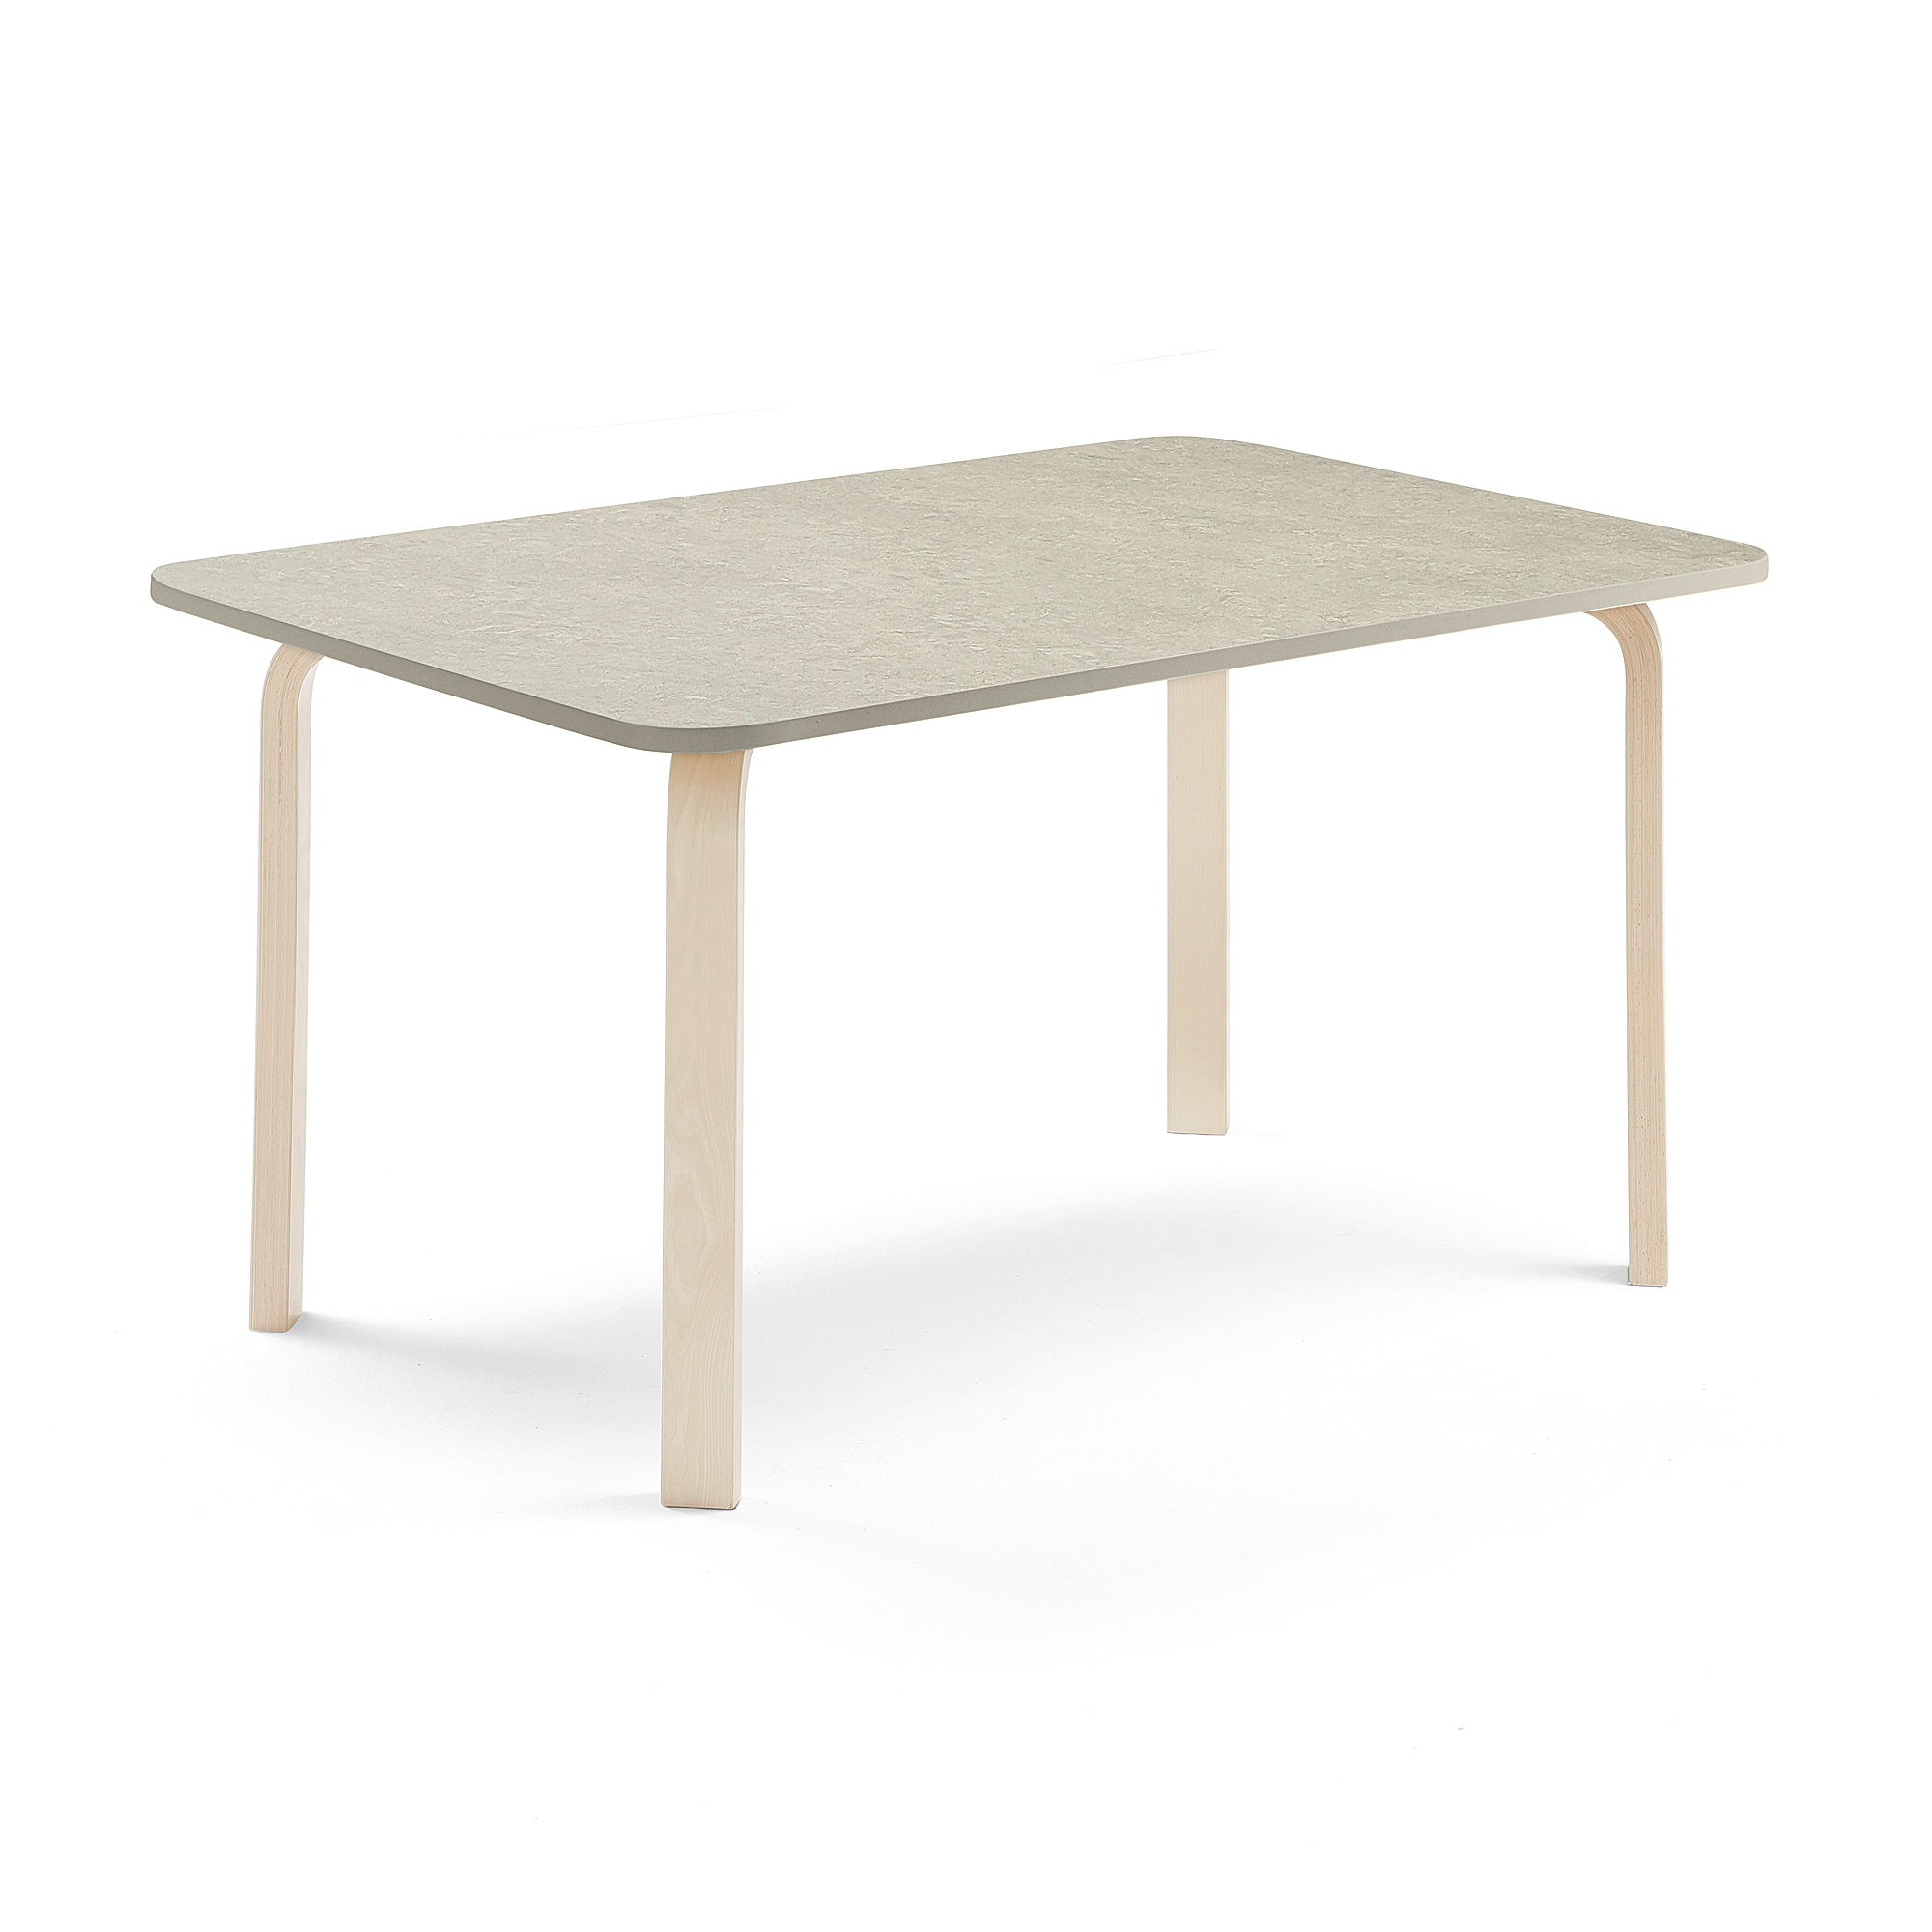 Stůl ELTON, 1400x700x640 mm, bříza, akustické linoleum, šedá